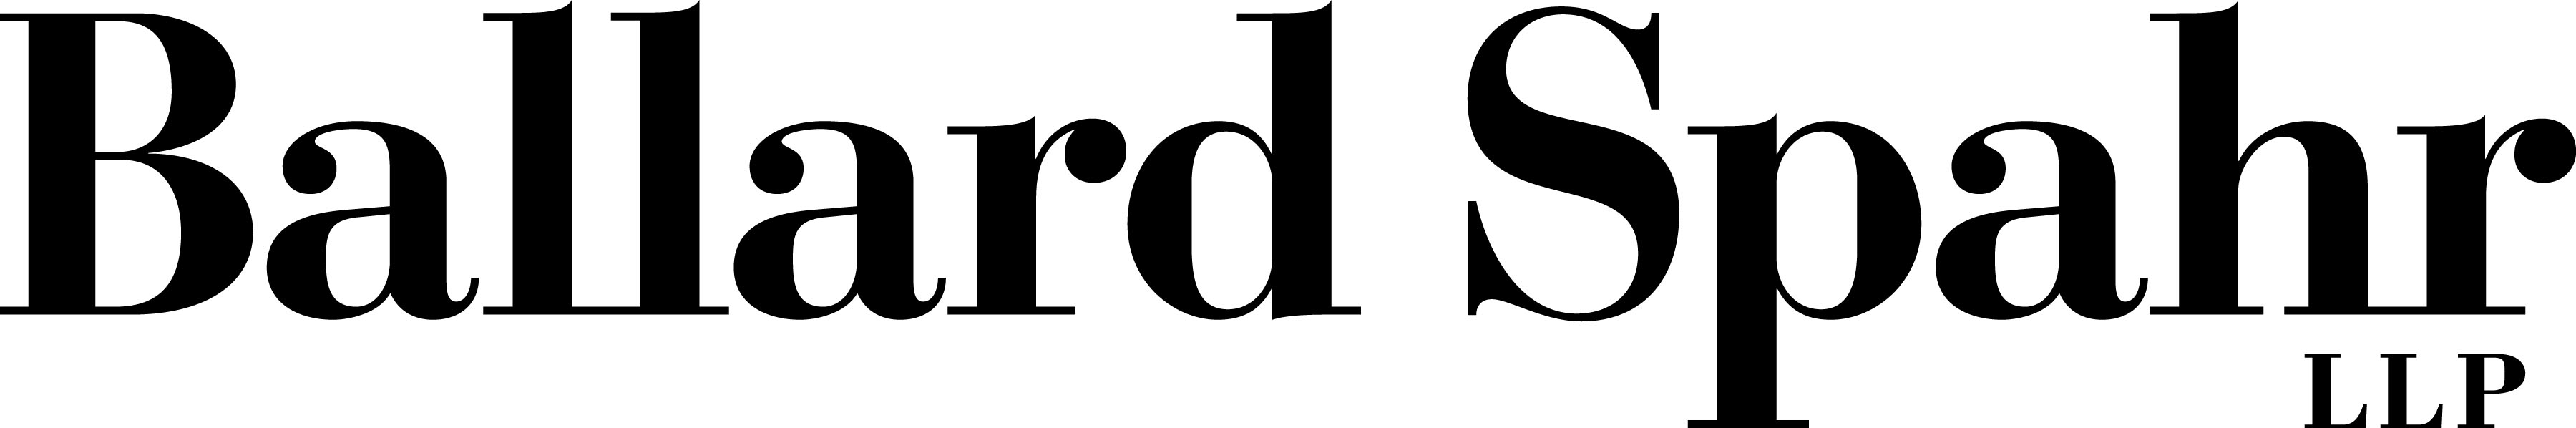 Ballard logo_xlarge.jpg